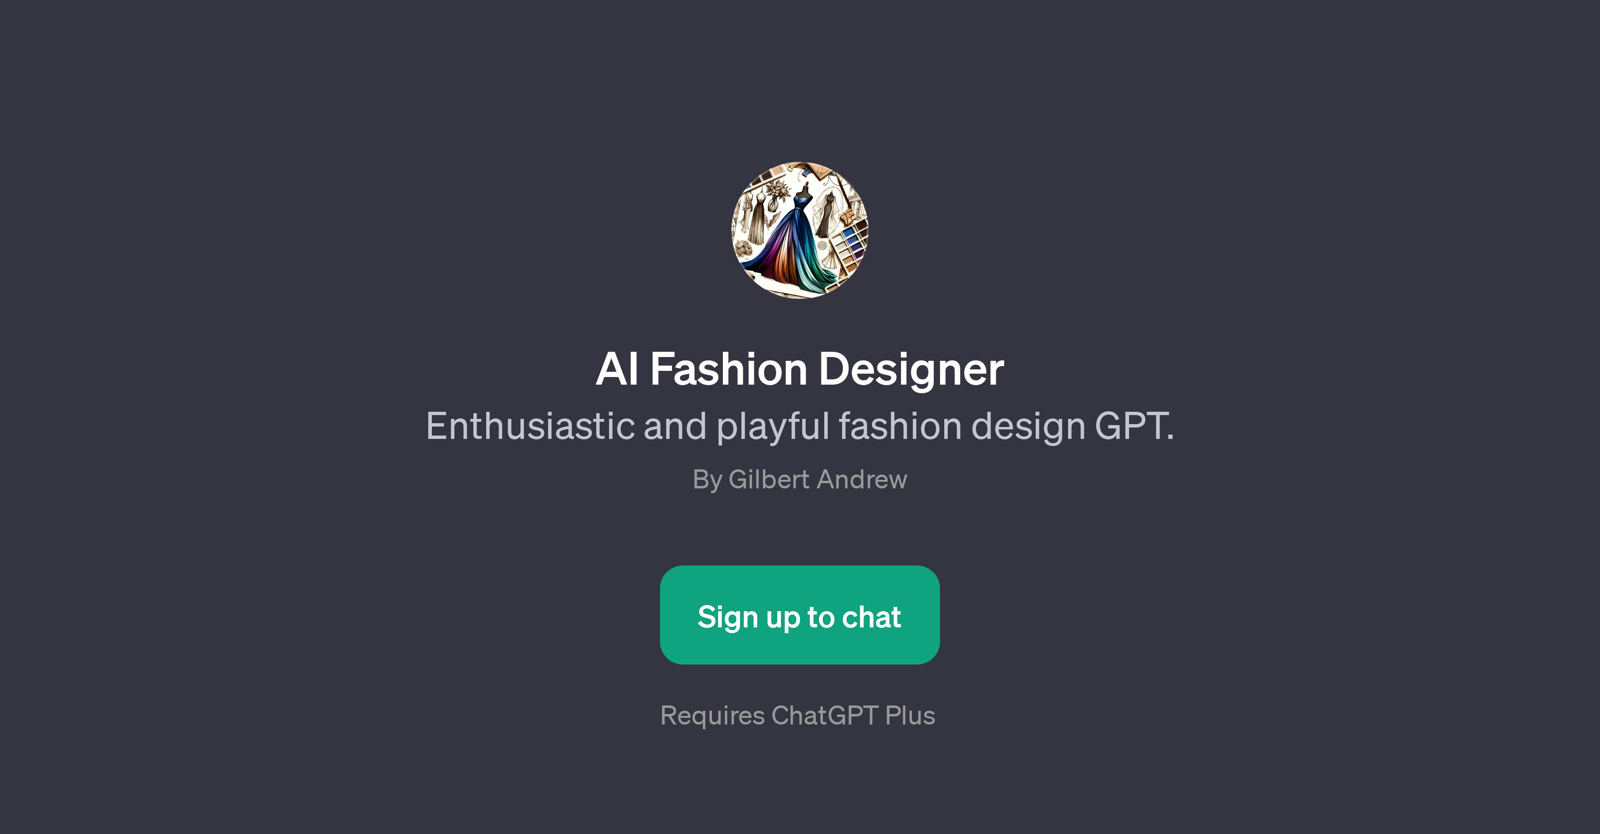 AI Fashion Designer website